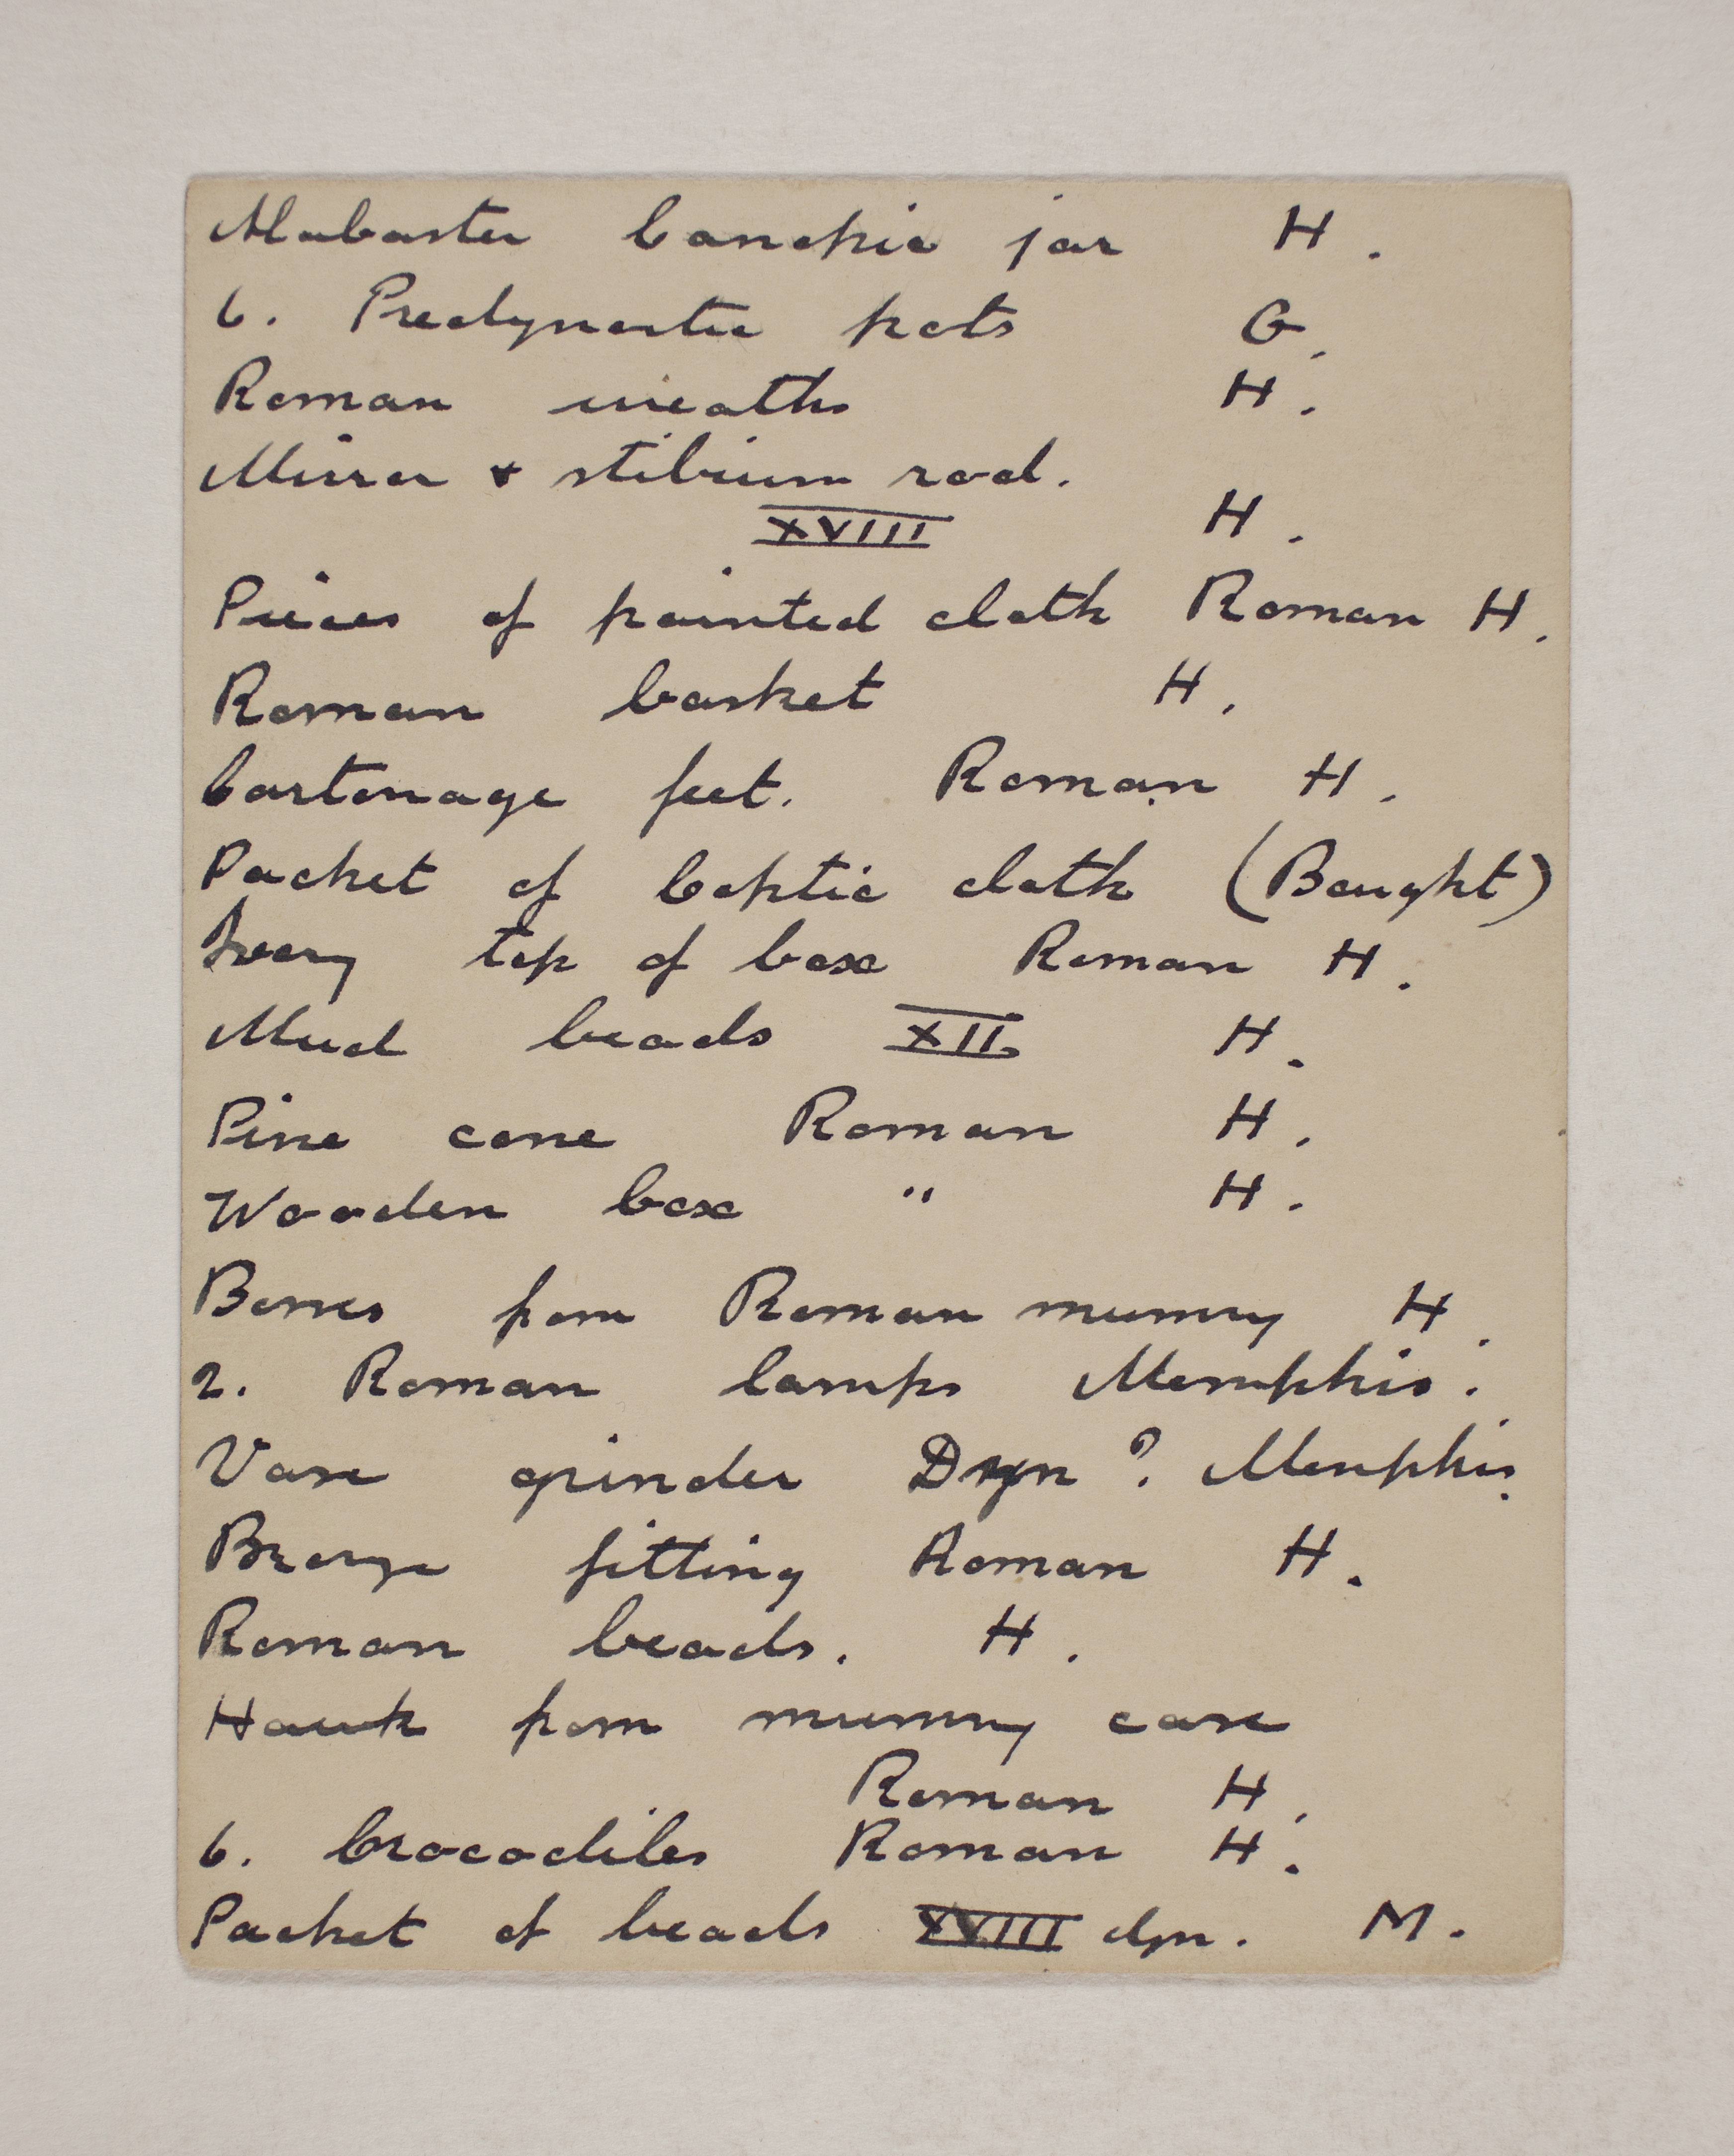 1910-11 Hawara, Gerzeh, Memphis, Mazghuneh Individual institution list  PMA/WFP1/D/19/15.1